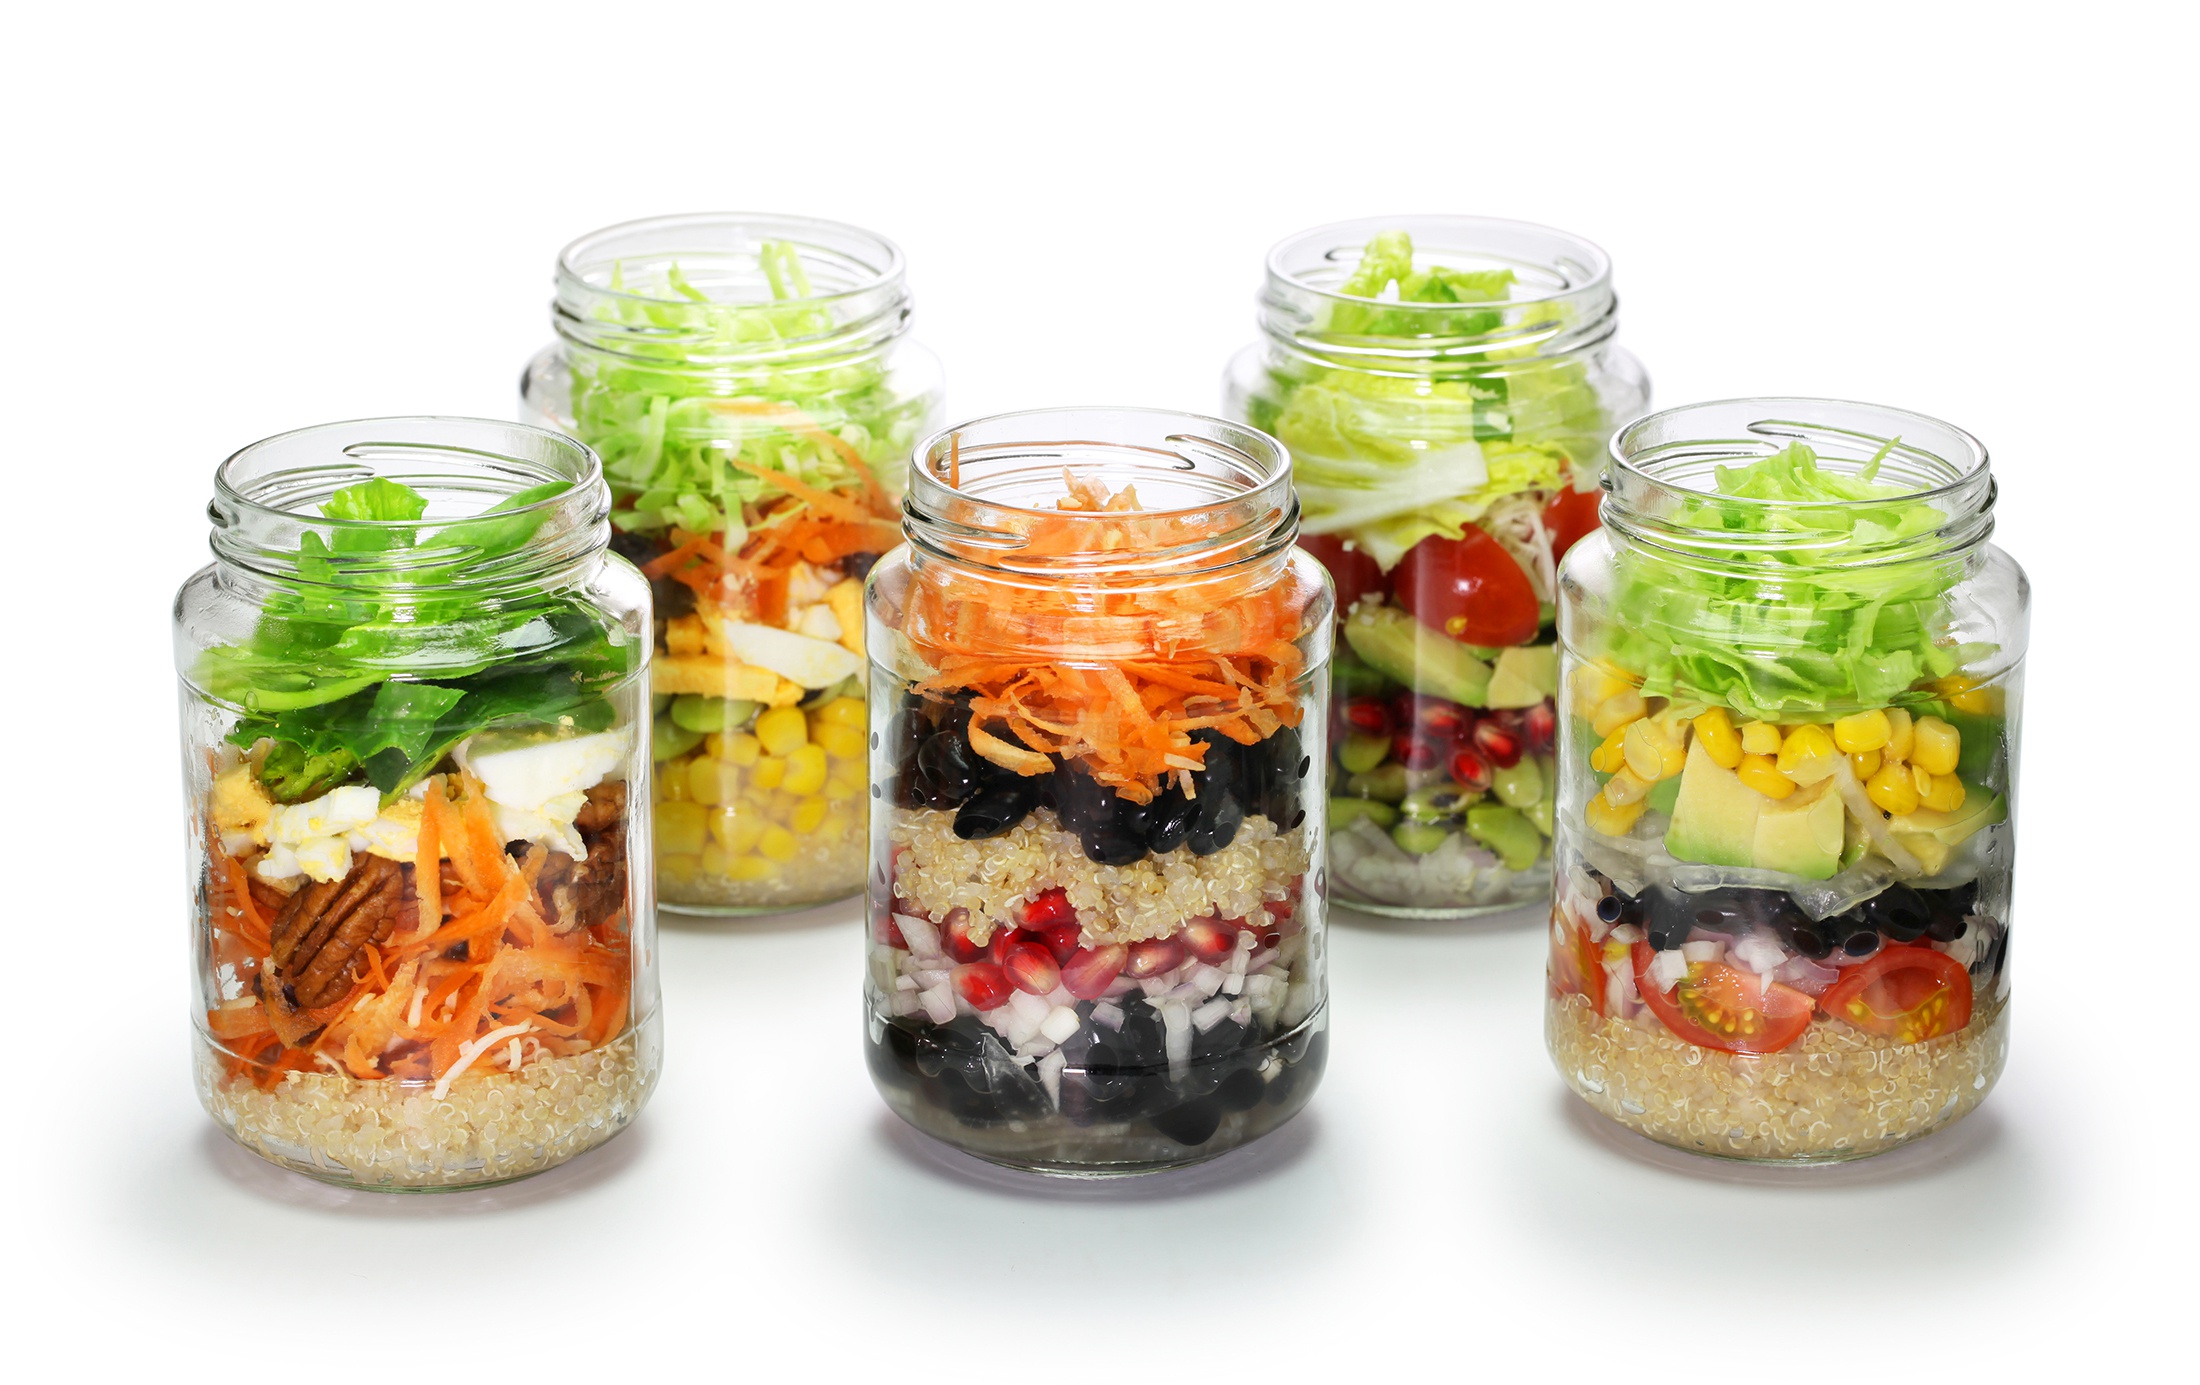 General 2200x1385 food glass simple background vegetables salad